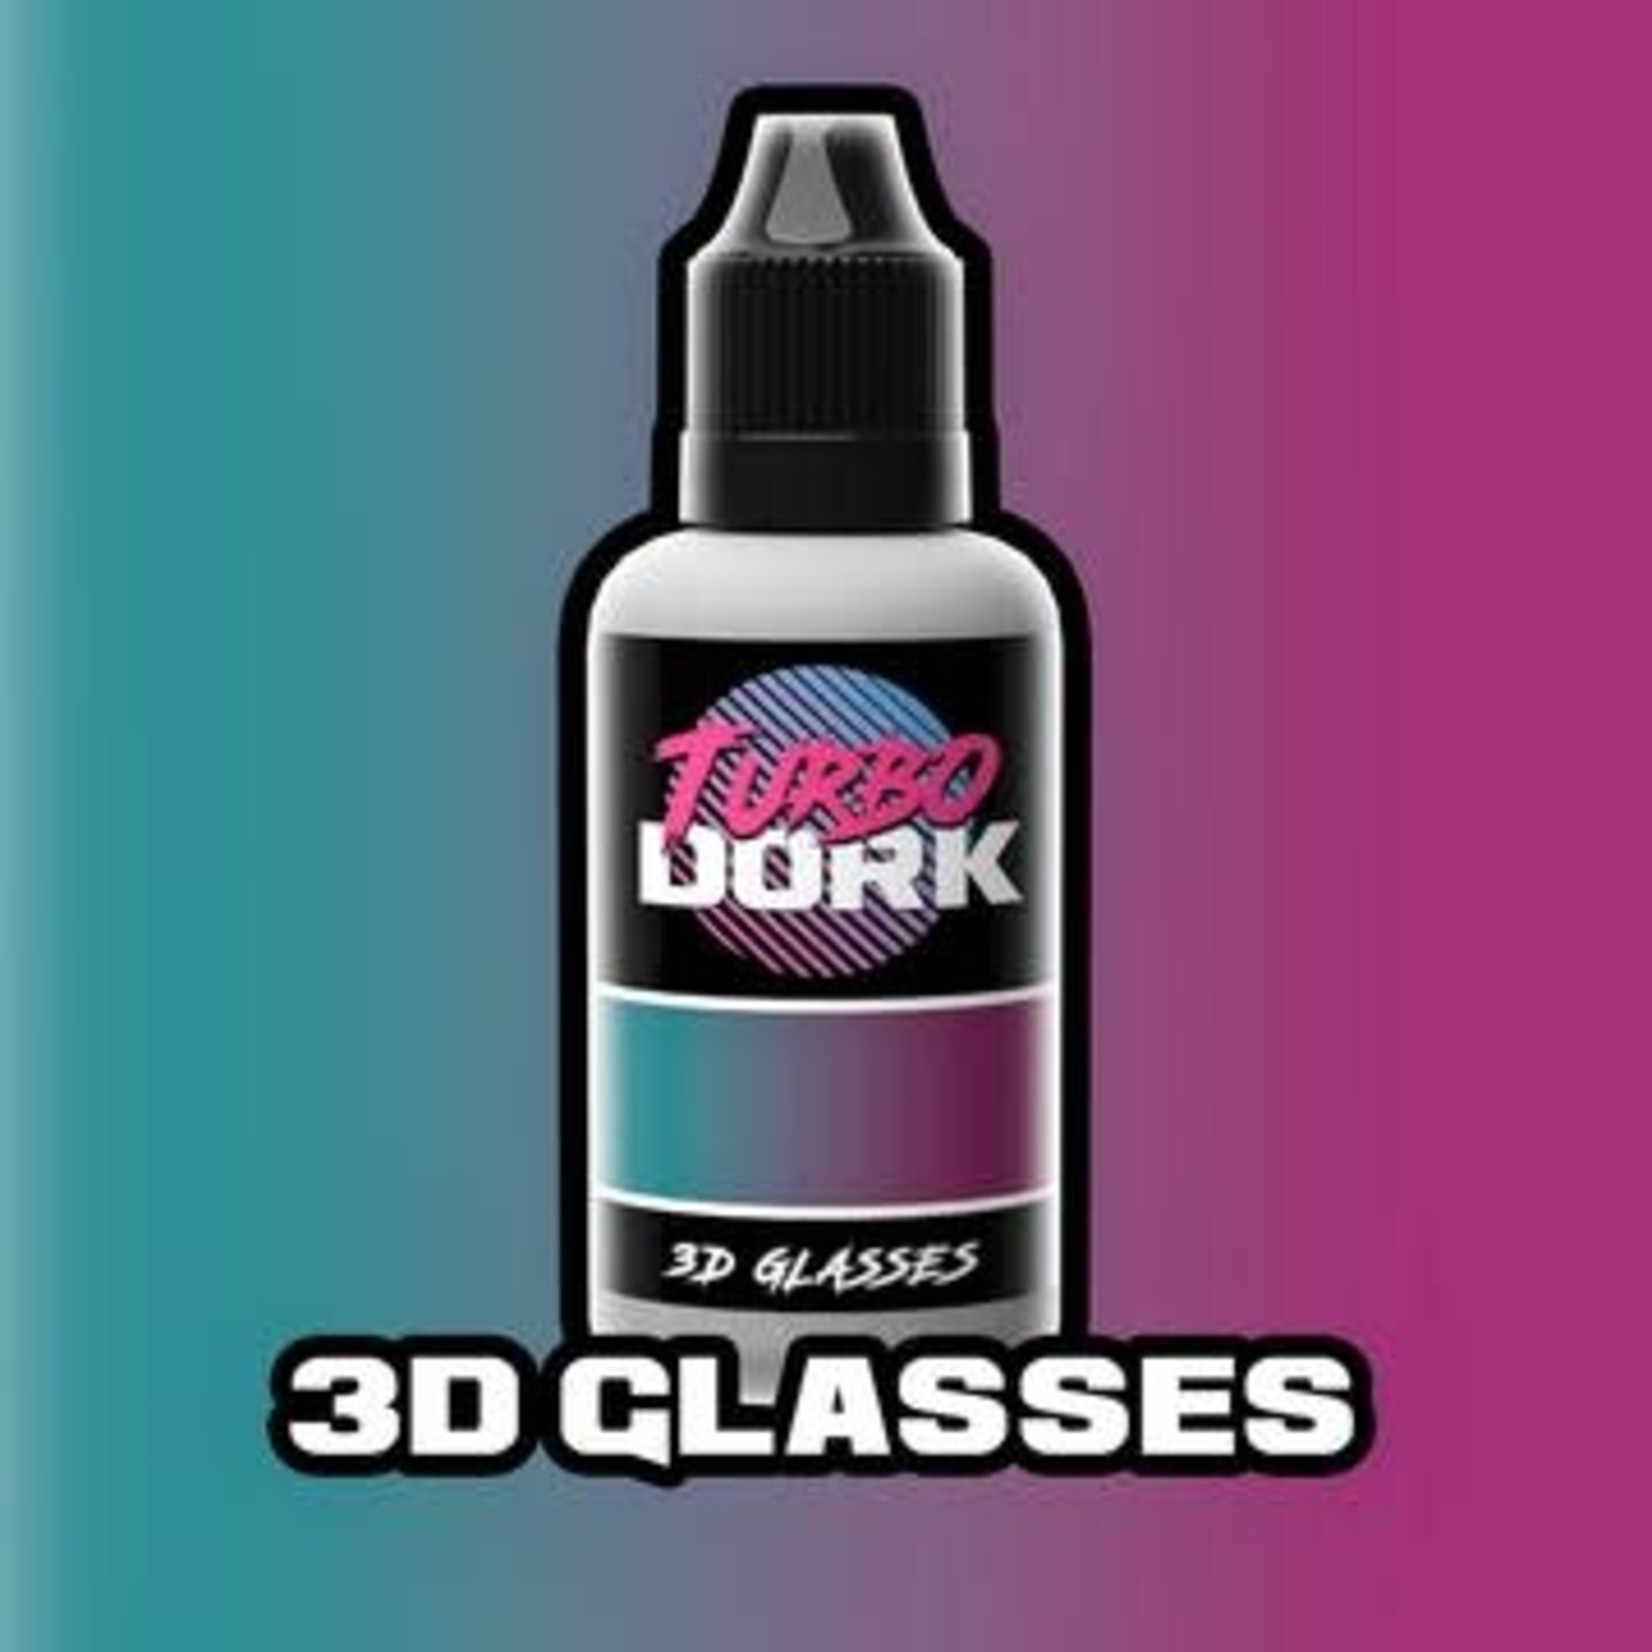 Turbo Dork Turbo Dork 3D Glasses Colorshift Acrylic Paint 20ml Bottle